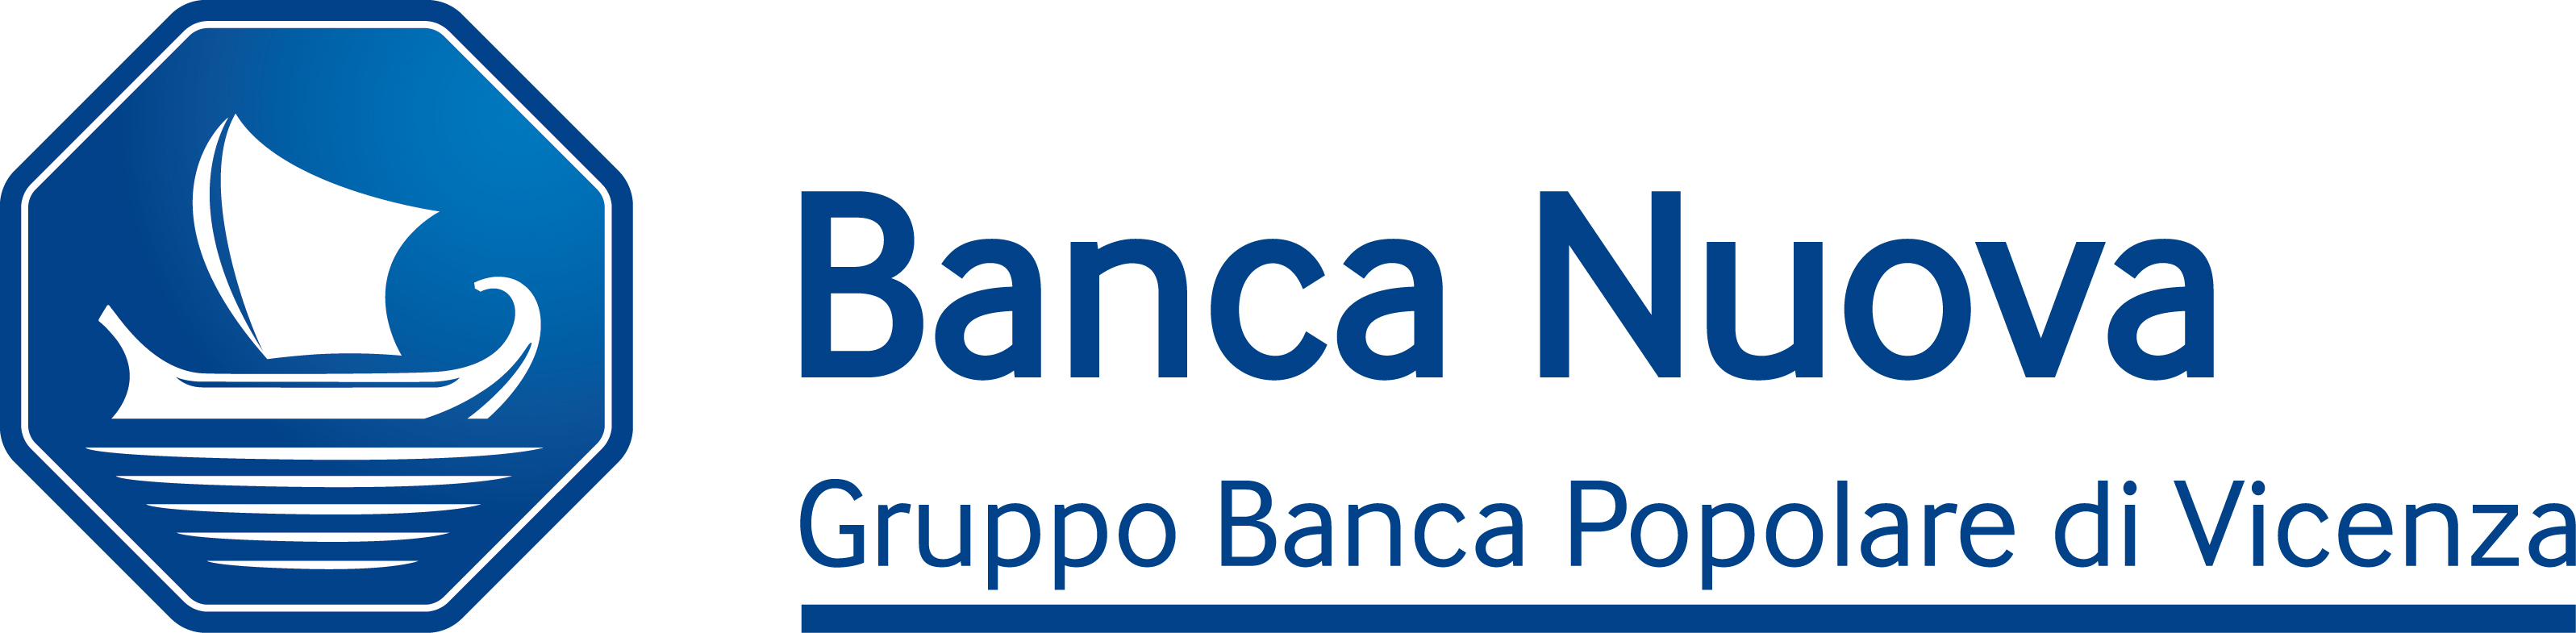 Mission commerciale BP - Banca Nuova